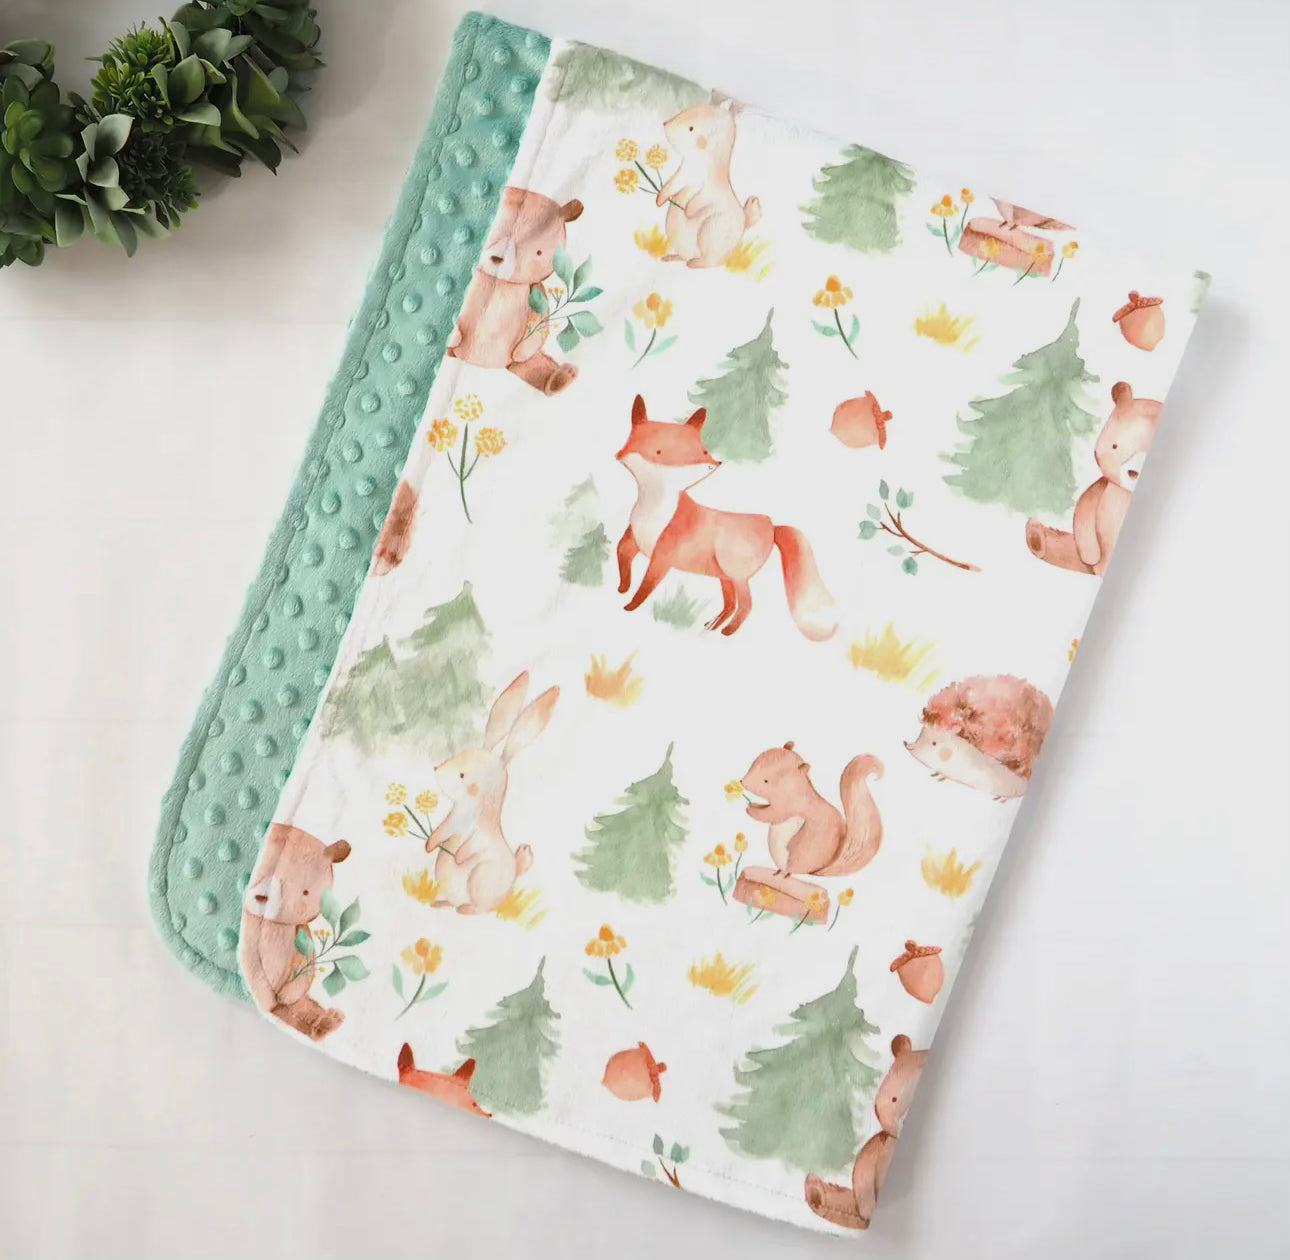 Baby & Toddler Minky Blanket - Forest Friends (Fox/Squirrels)